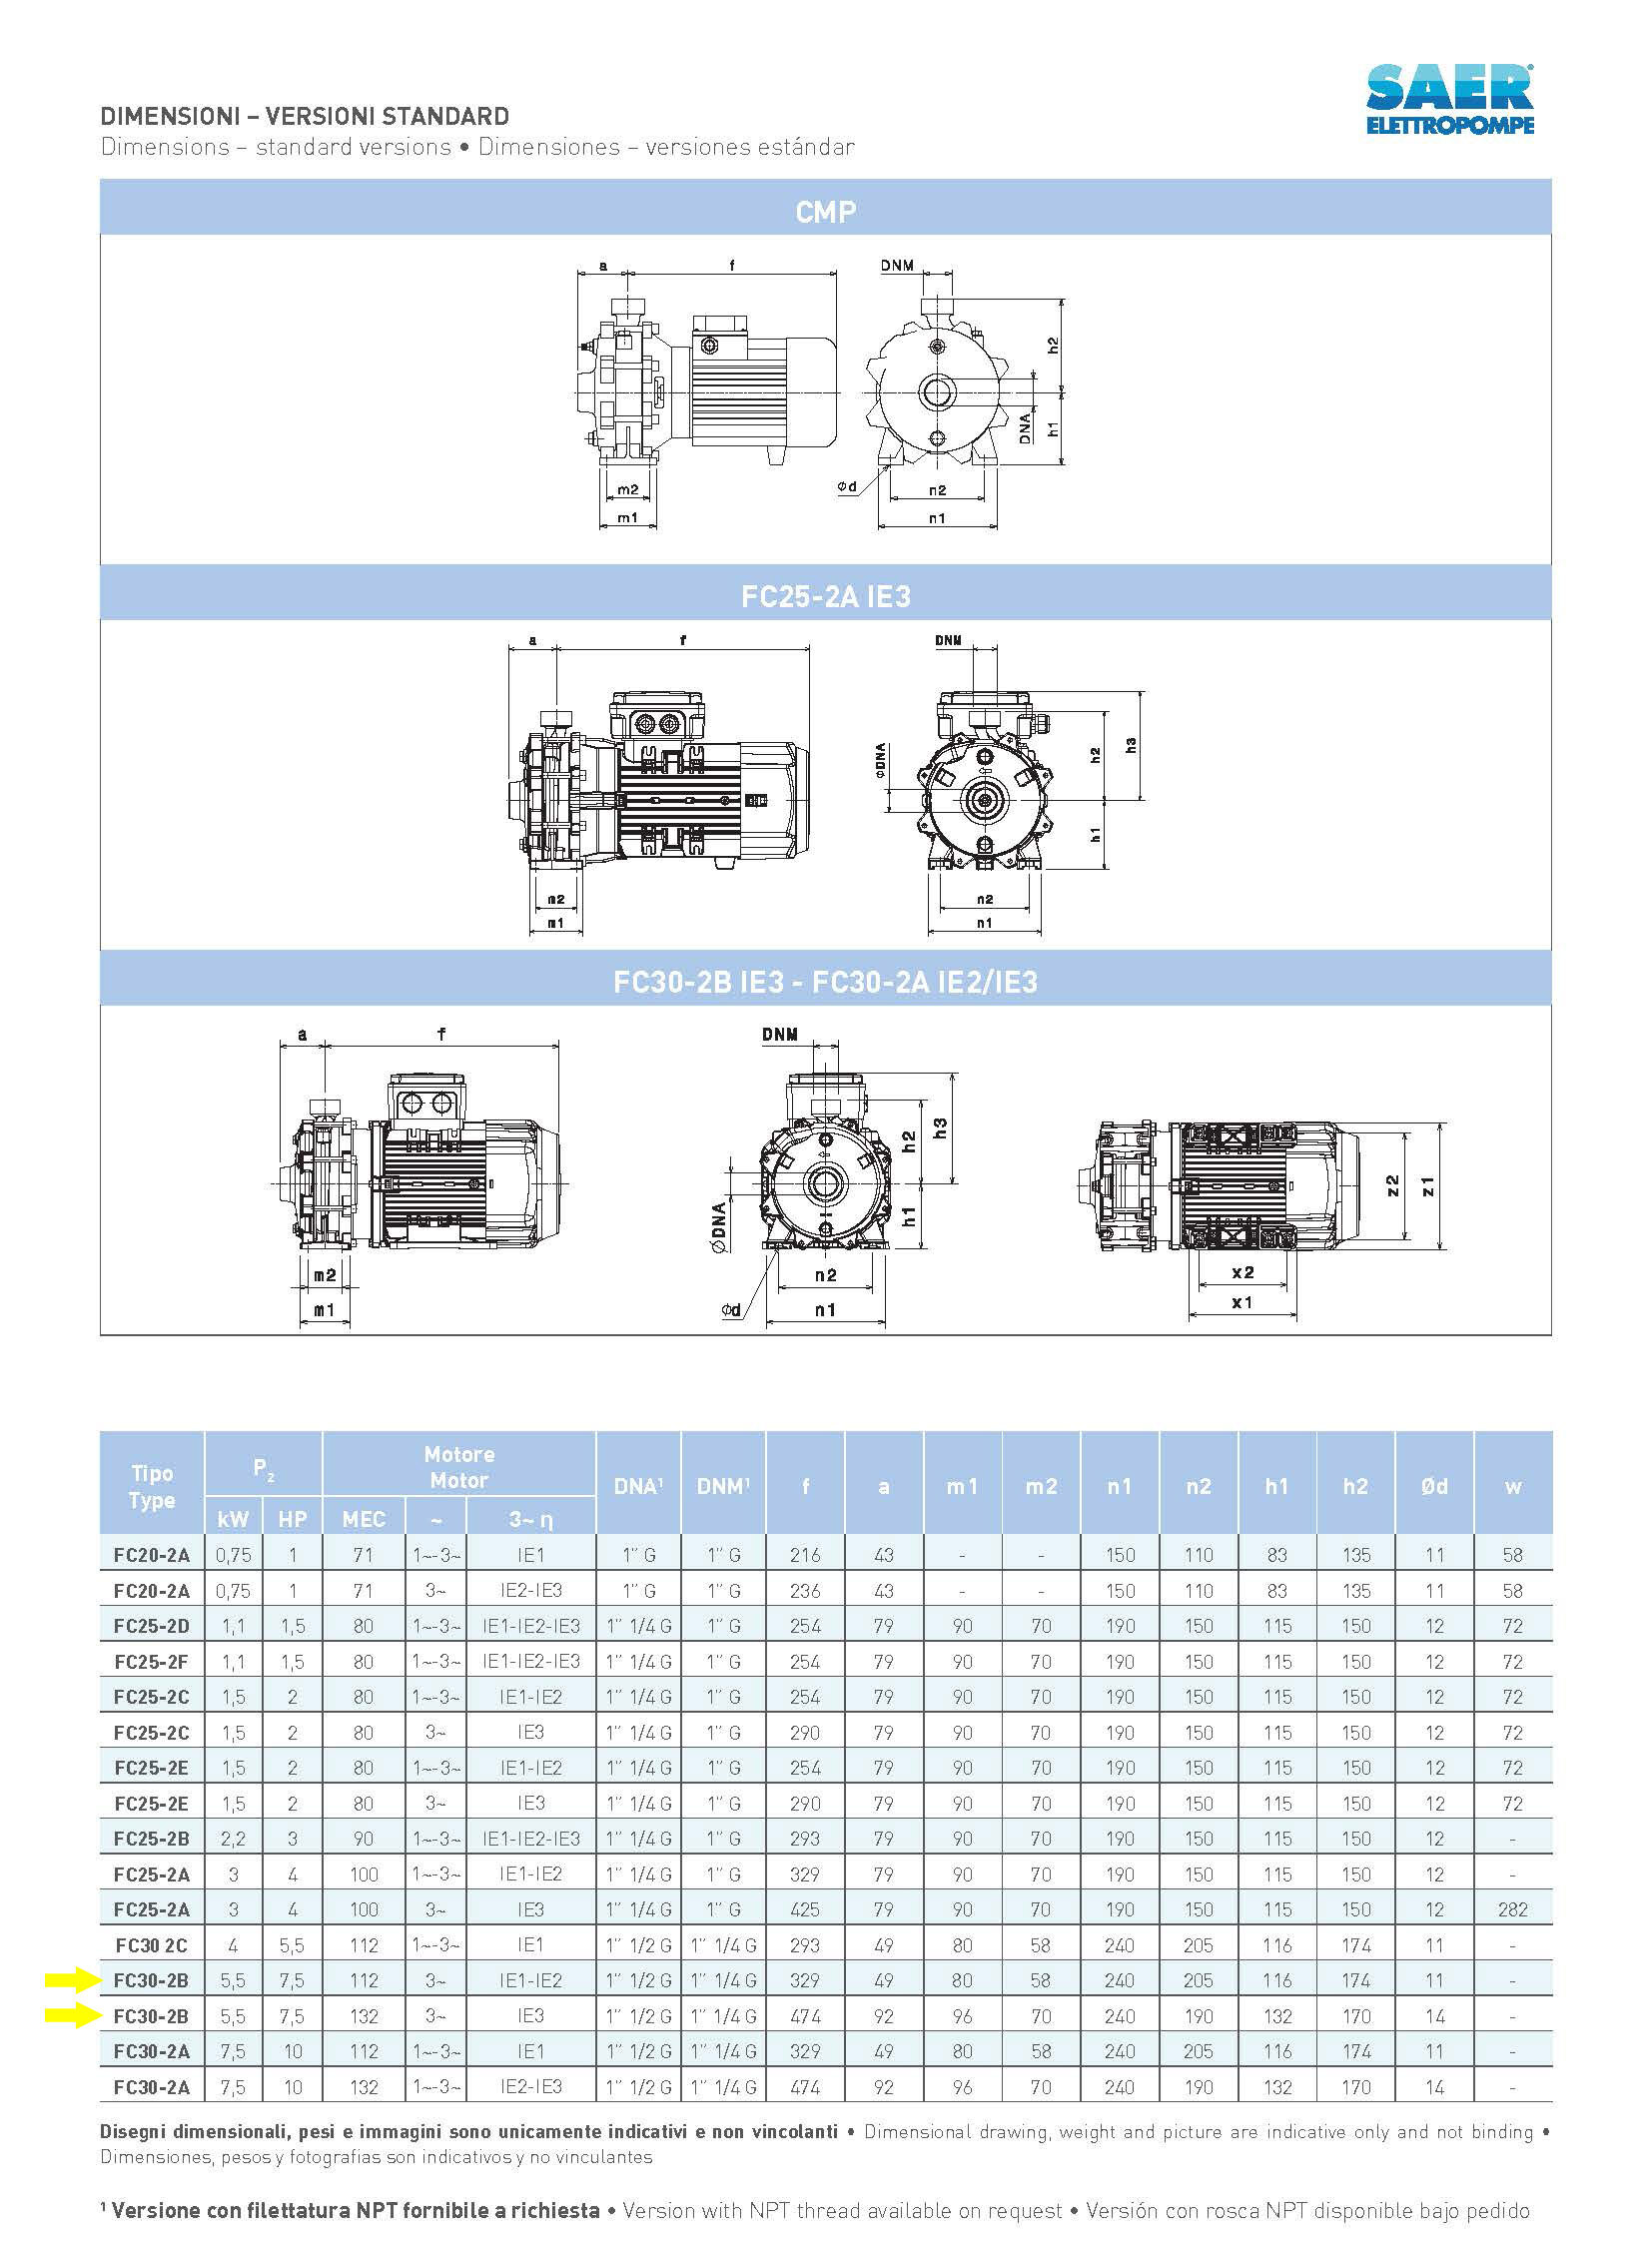 SAER-USA FC30-2B Centrifugal Pump - Dimensions